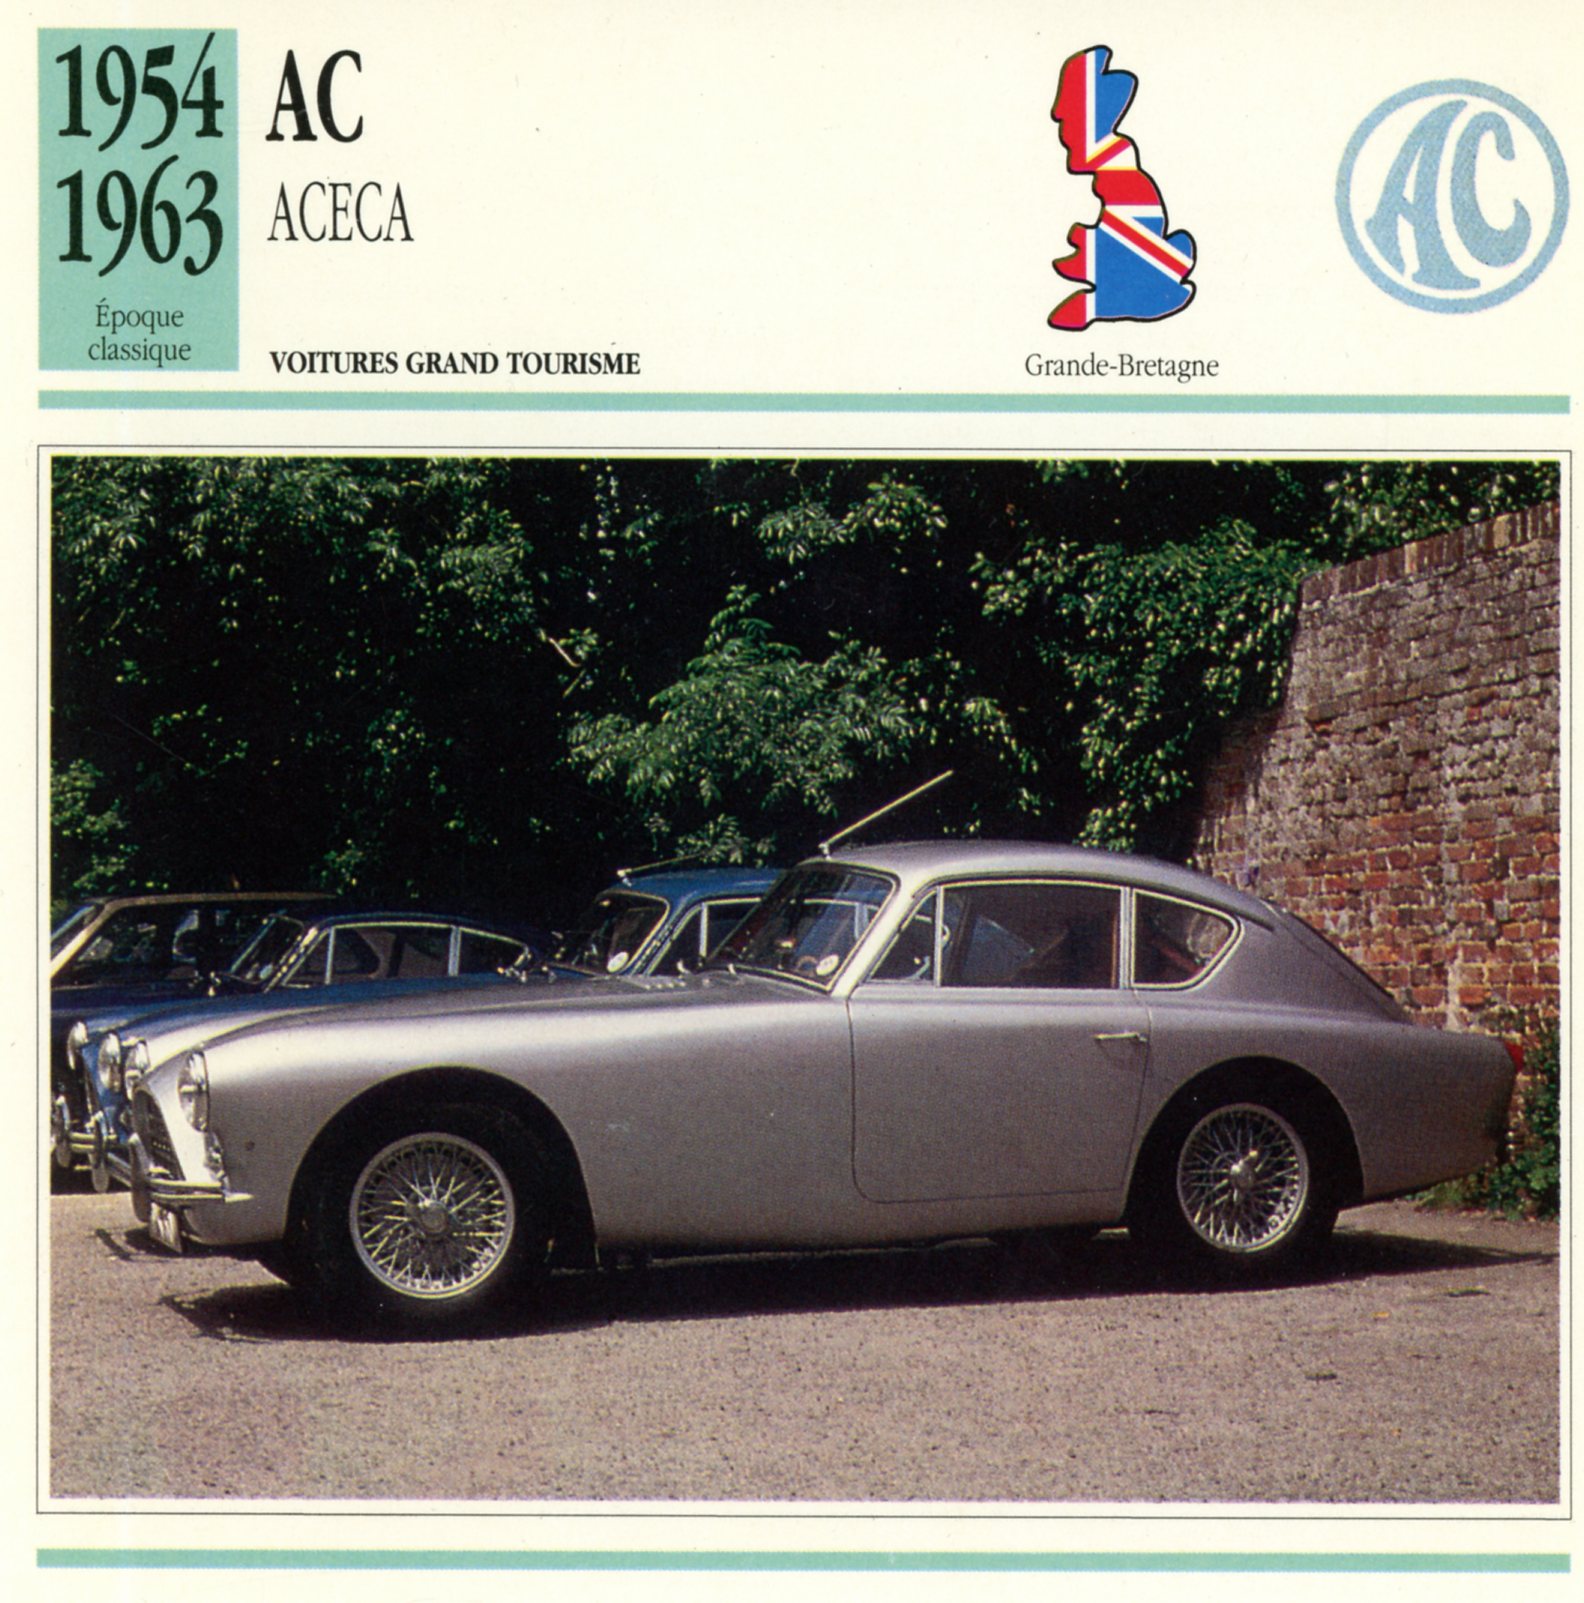 FICHE-AUTO-AC-ACECA-1954-1963-LEMASTERBROCKERS-CARS-CARD